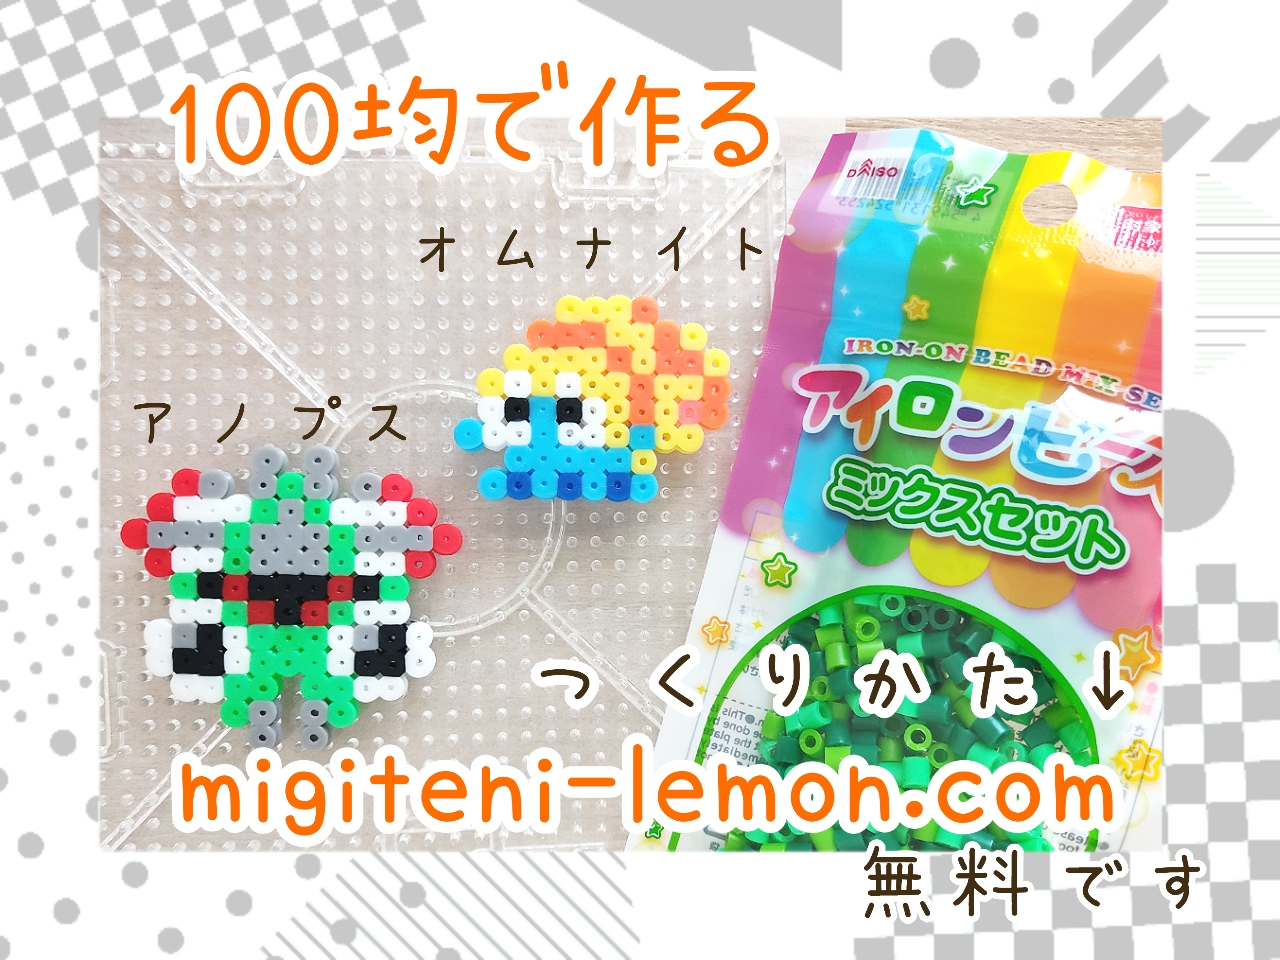 anopth-anorith-omnite-omanyte-pokemon-small-handmade-iron-beads-free-zuan-kaseki-kodai-small-square-kawaii-daiso